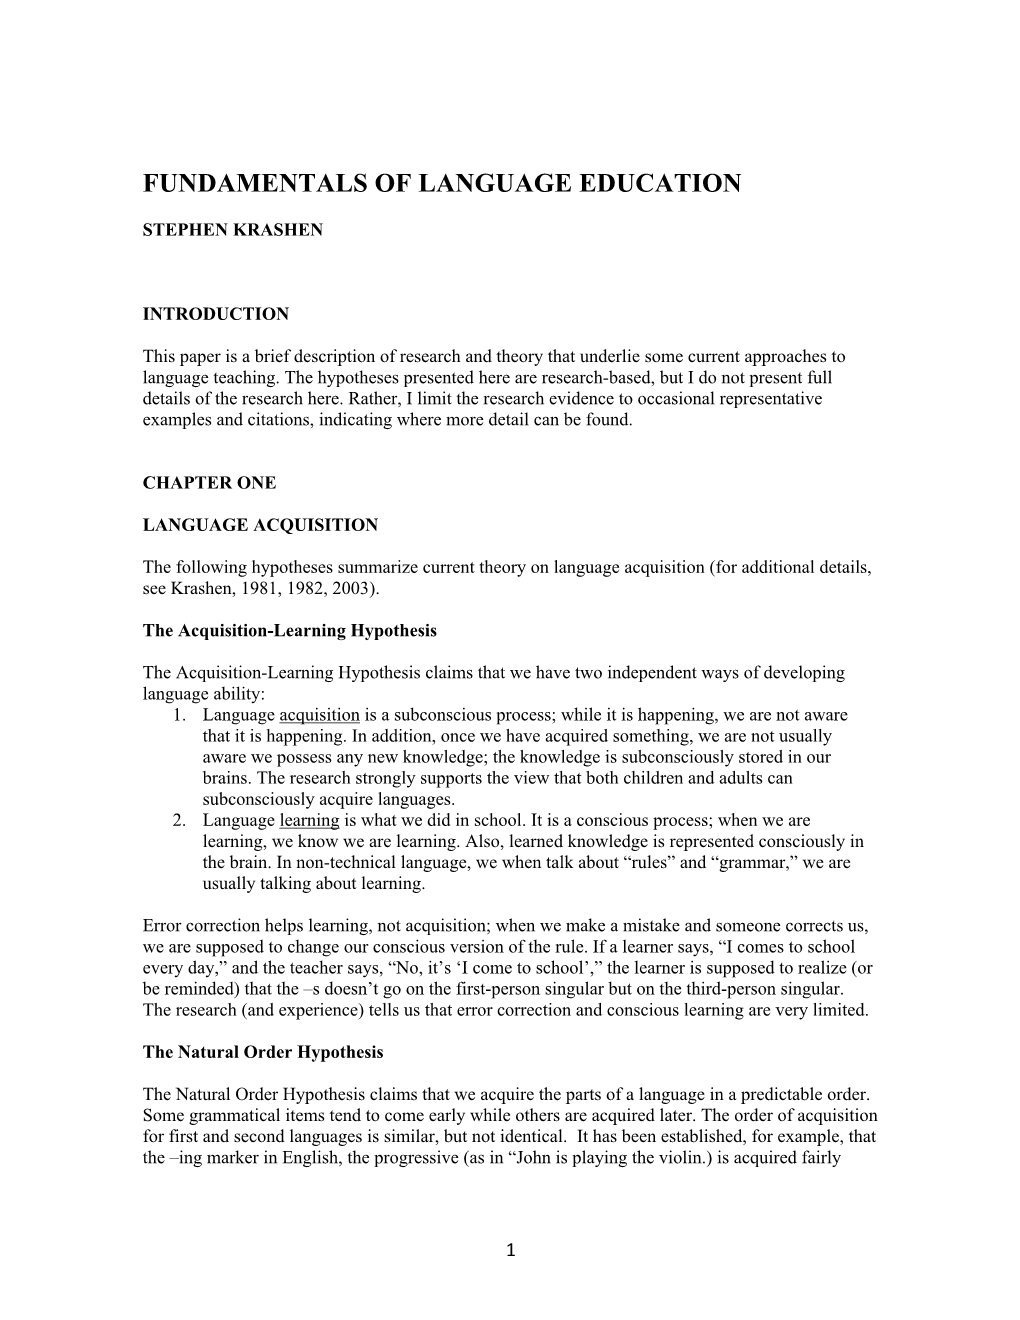 Fundamentals of Language Education